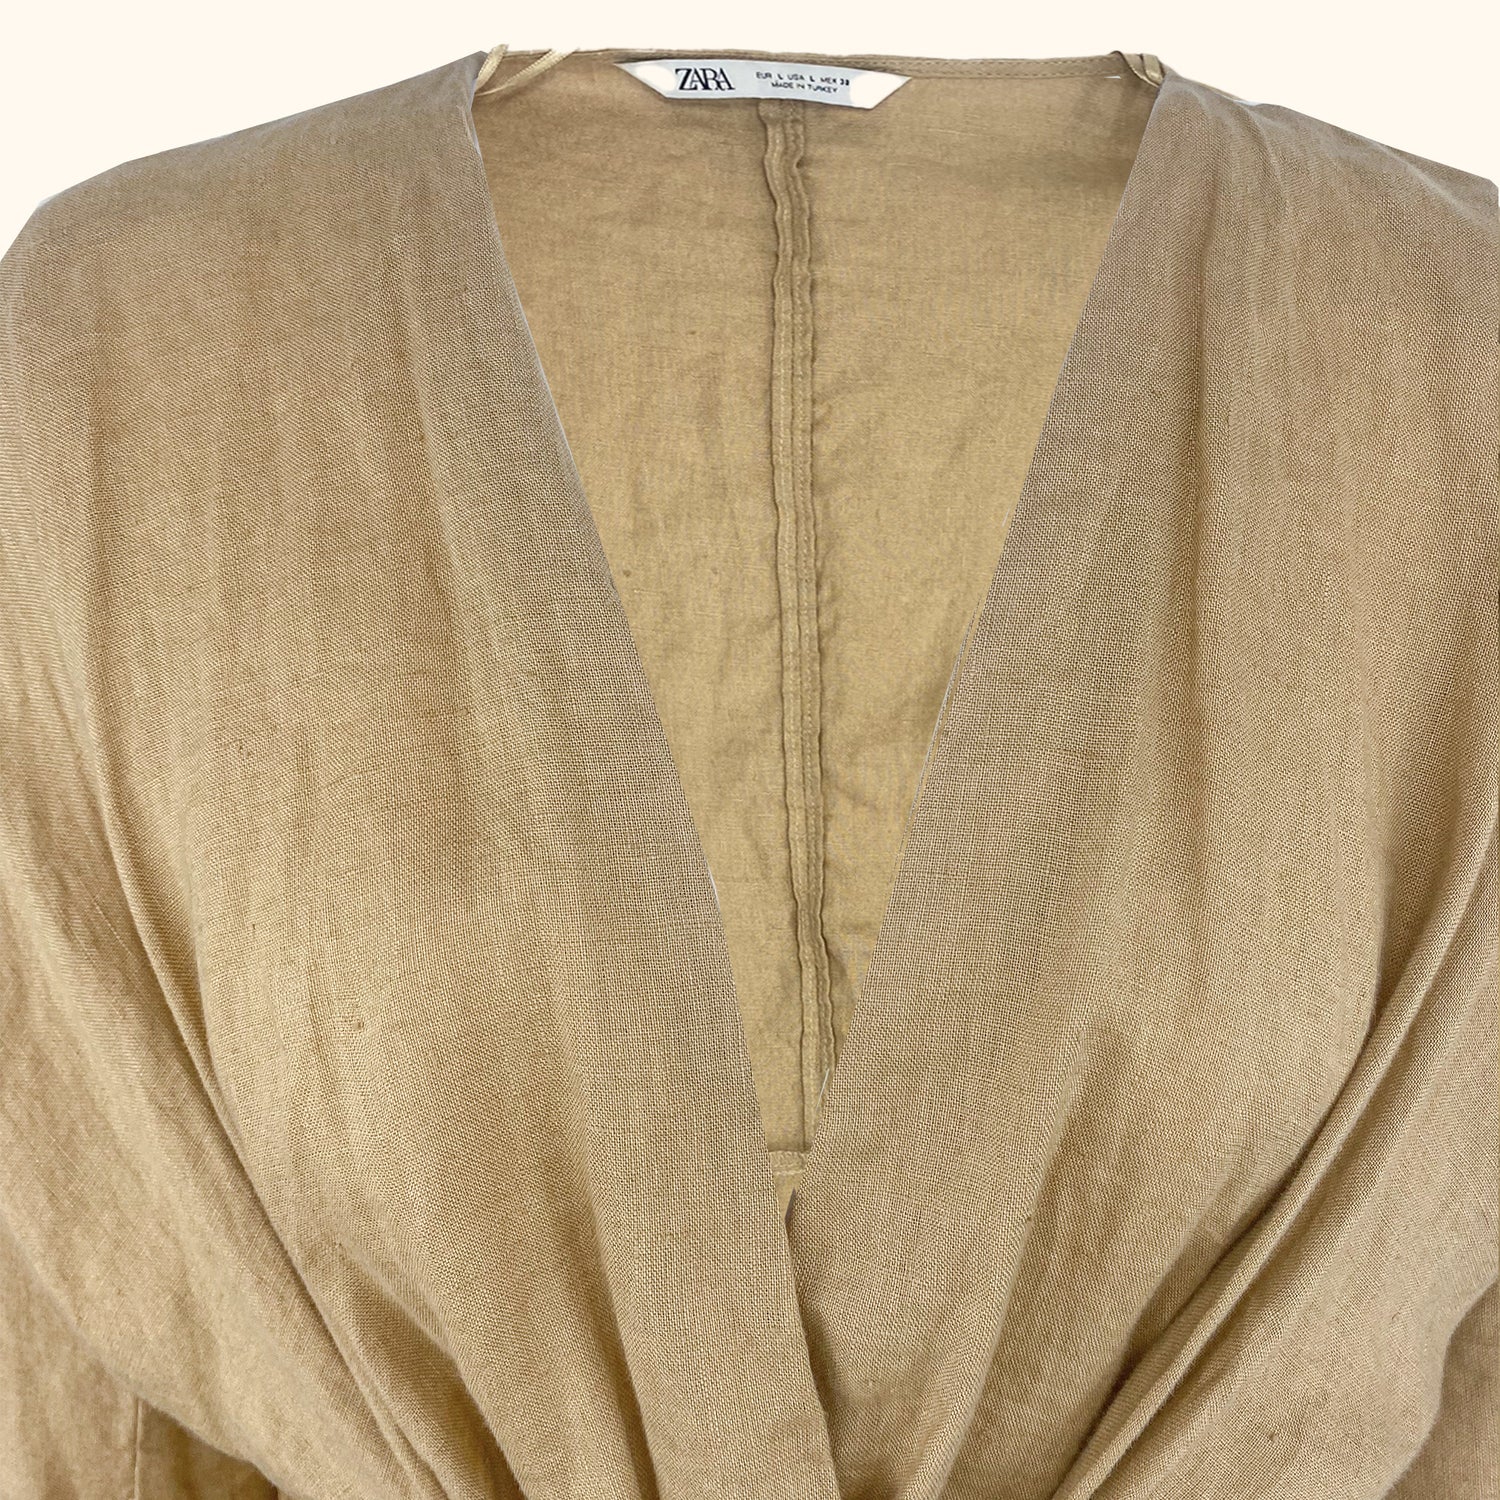 Zara Beige Linen Wrap Front Blouse - Size Large - Zara - Tops &amp; Shirts